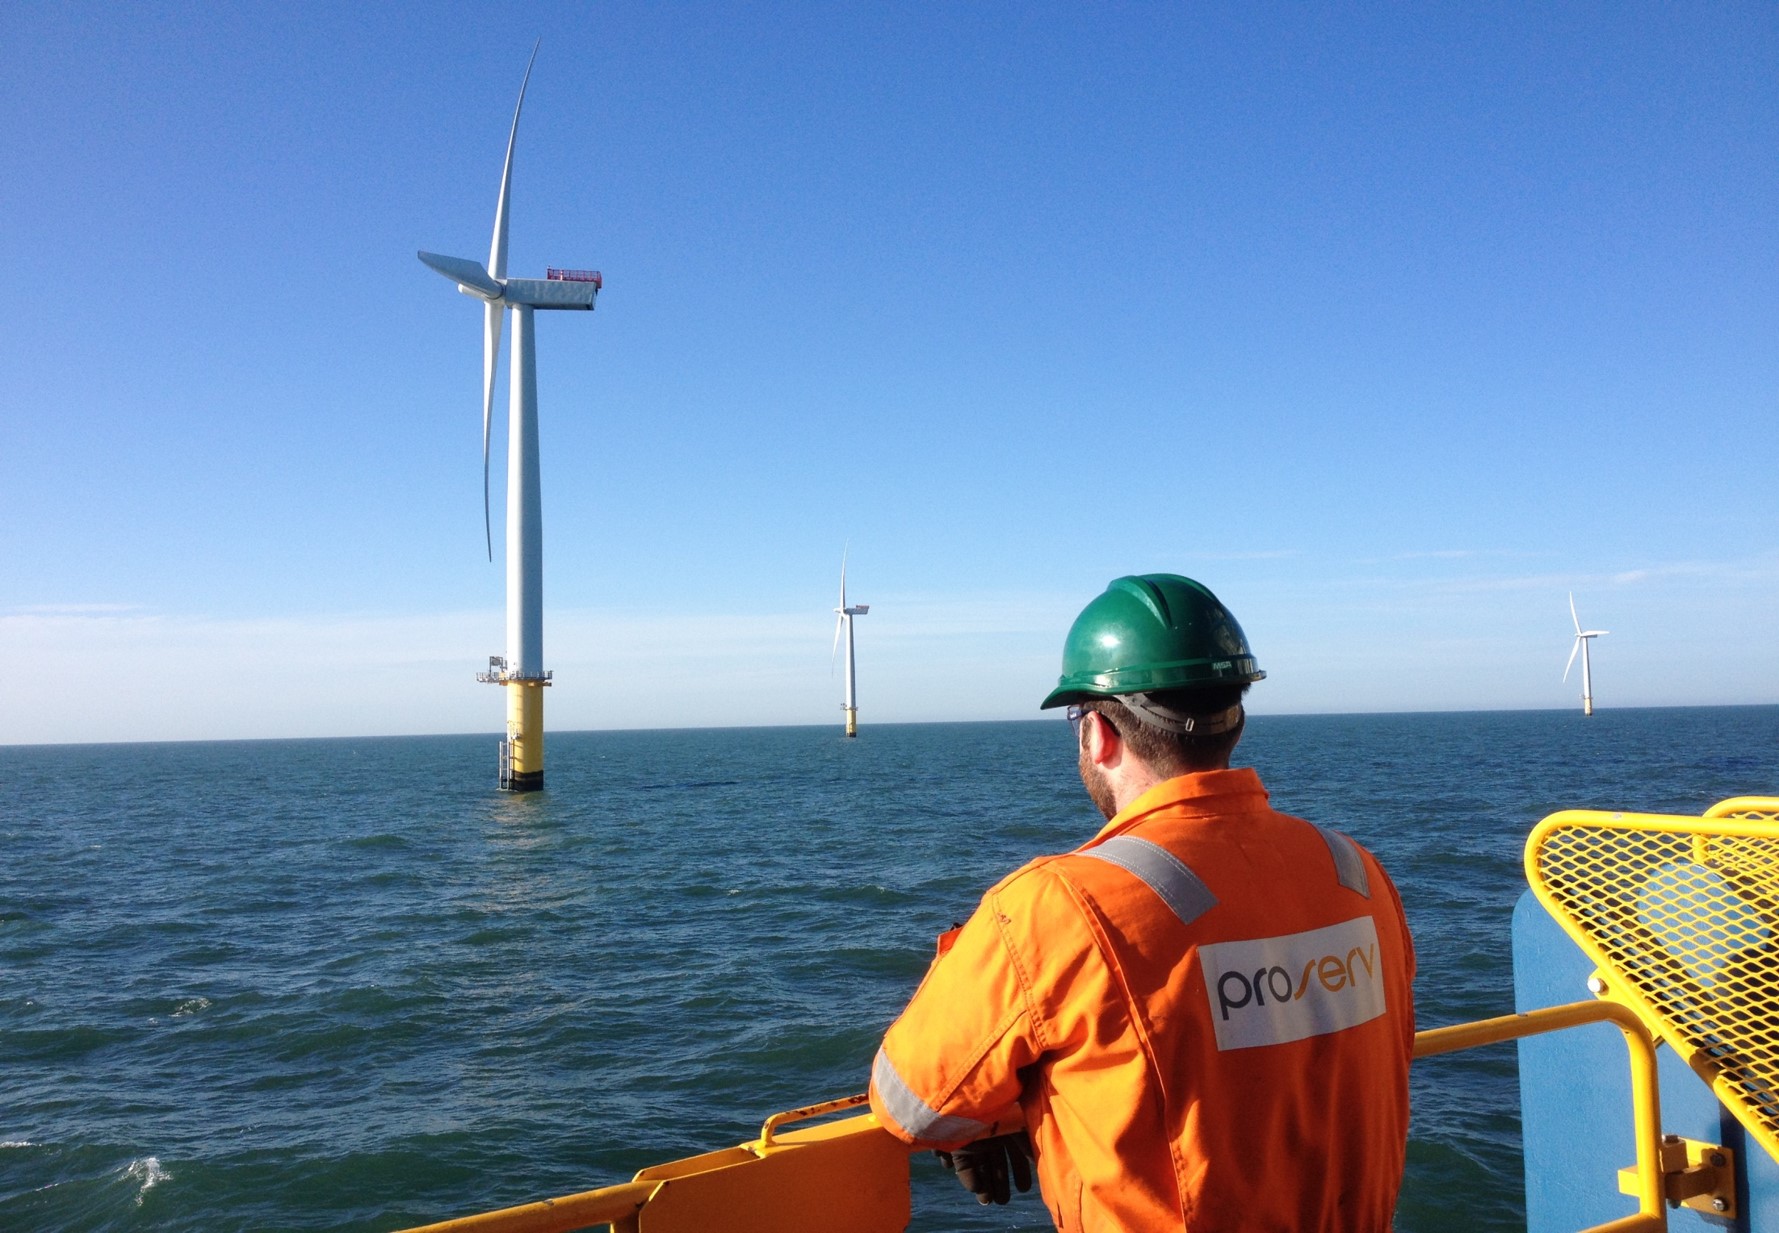 2 A Proserv technician surveys an offshore wind farm